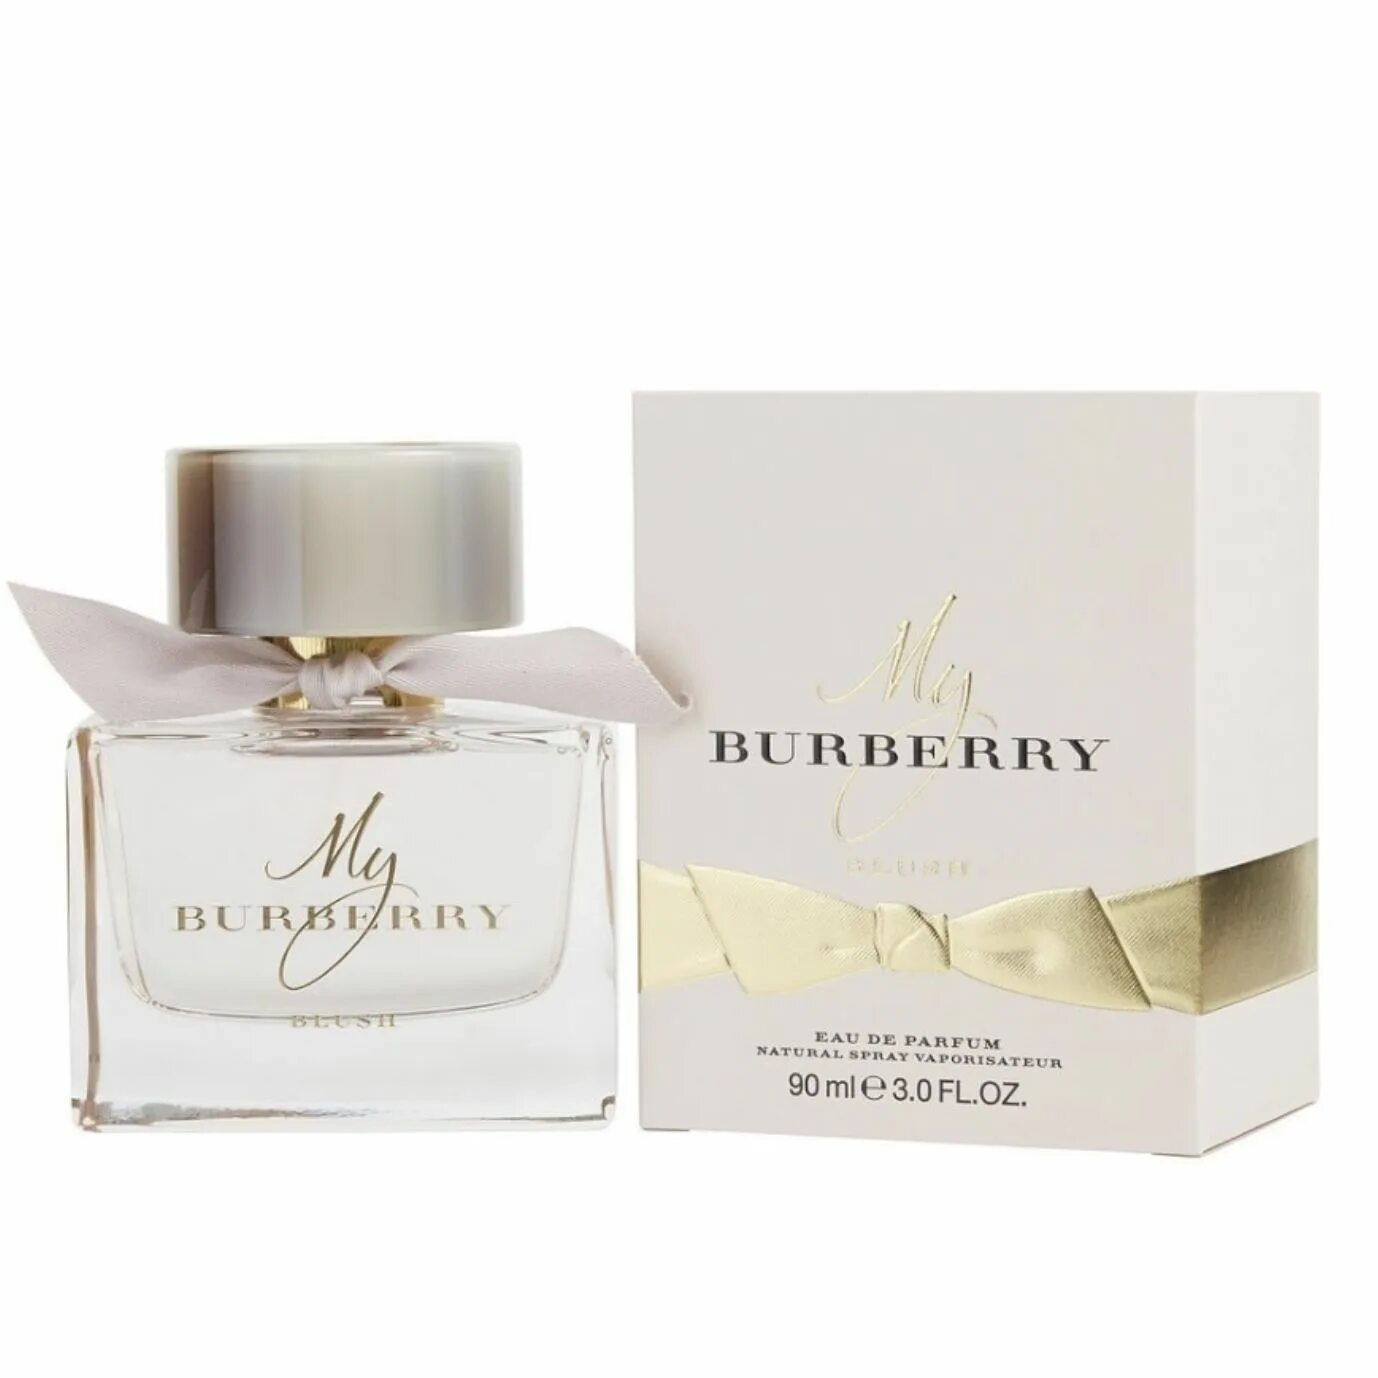 My Burberry Eau de Parfum 90ml. My Burberry blush, 90 ml. Burberry my Burberry blush EDP, 90 ml. Burberry my Burberry blush (Парфюм Барбери) - 90 мл..